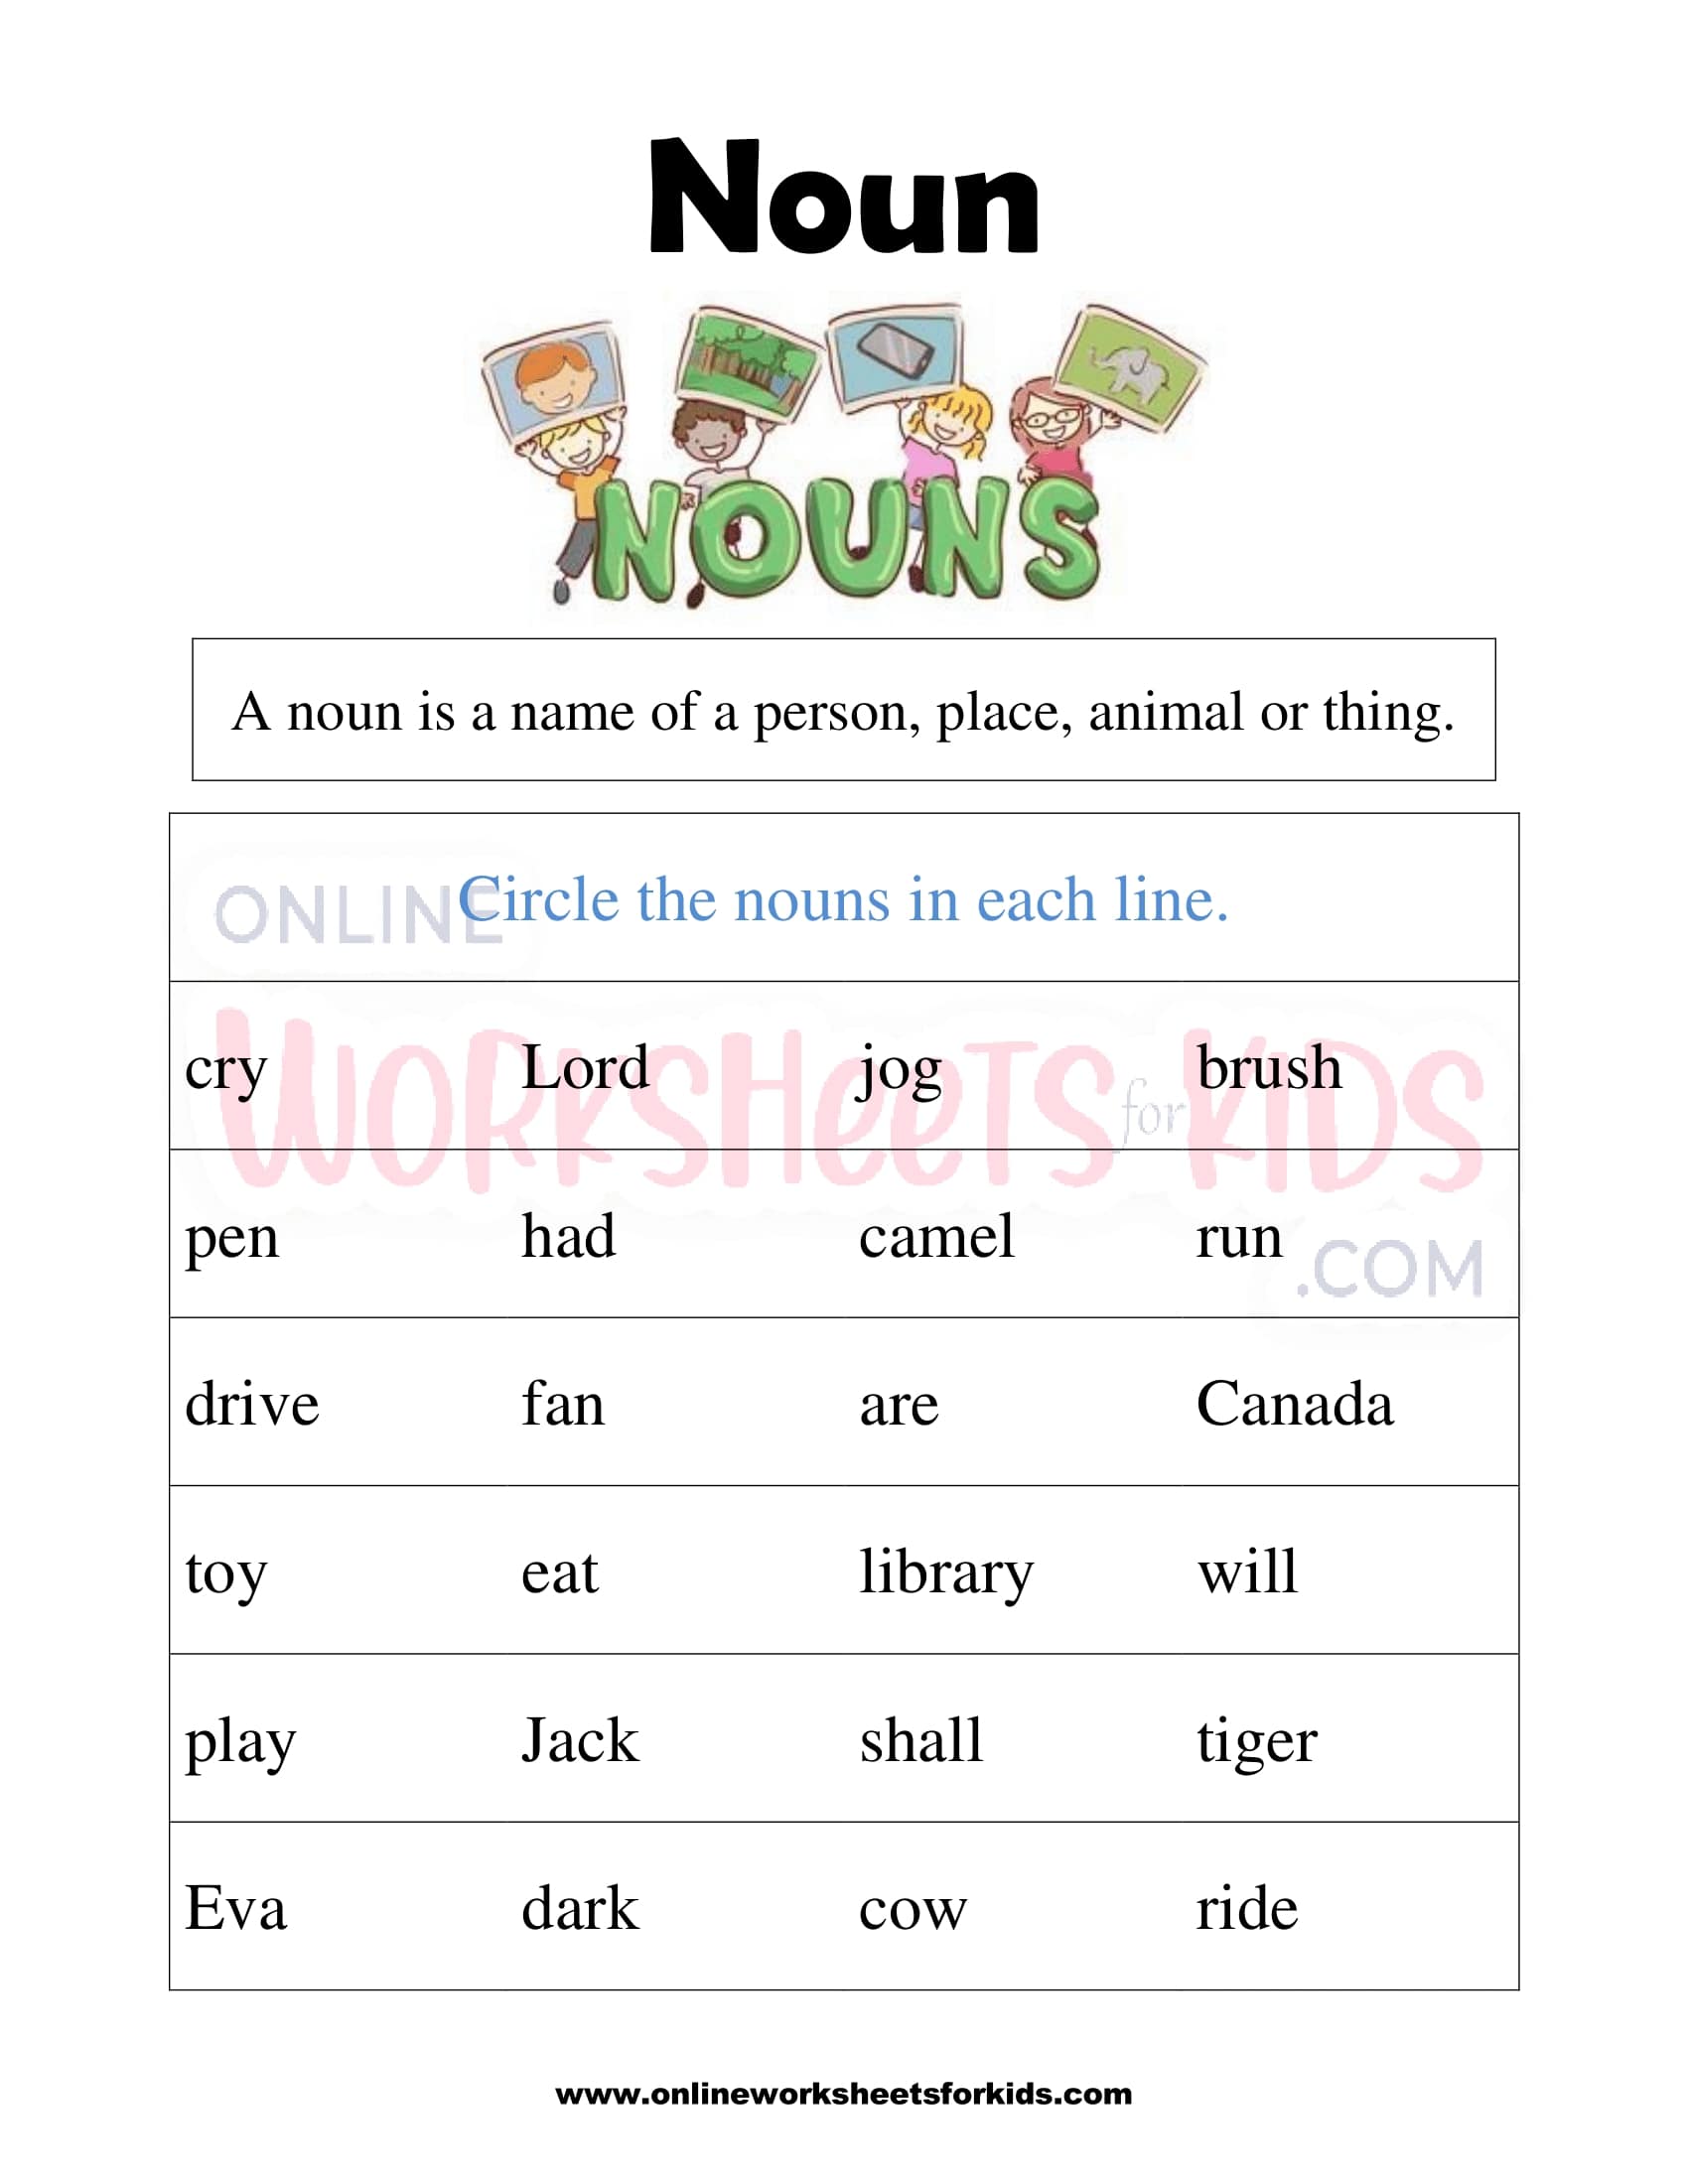 nouns-english-grammar-worksheet-english-treasure-trove-grade-1